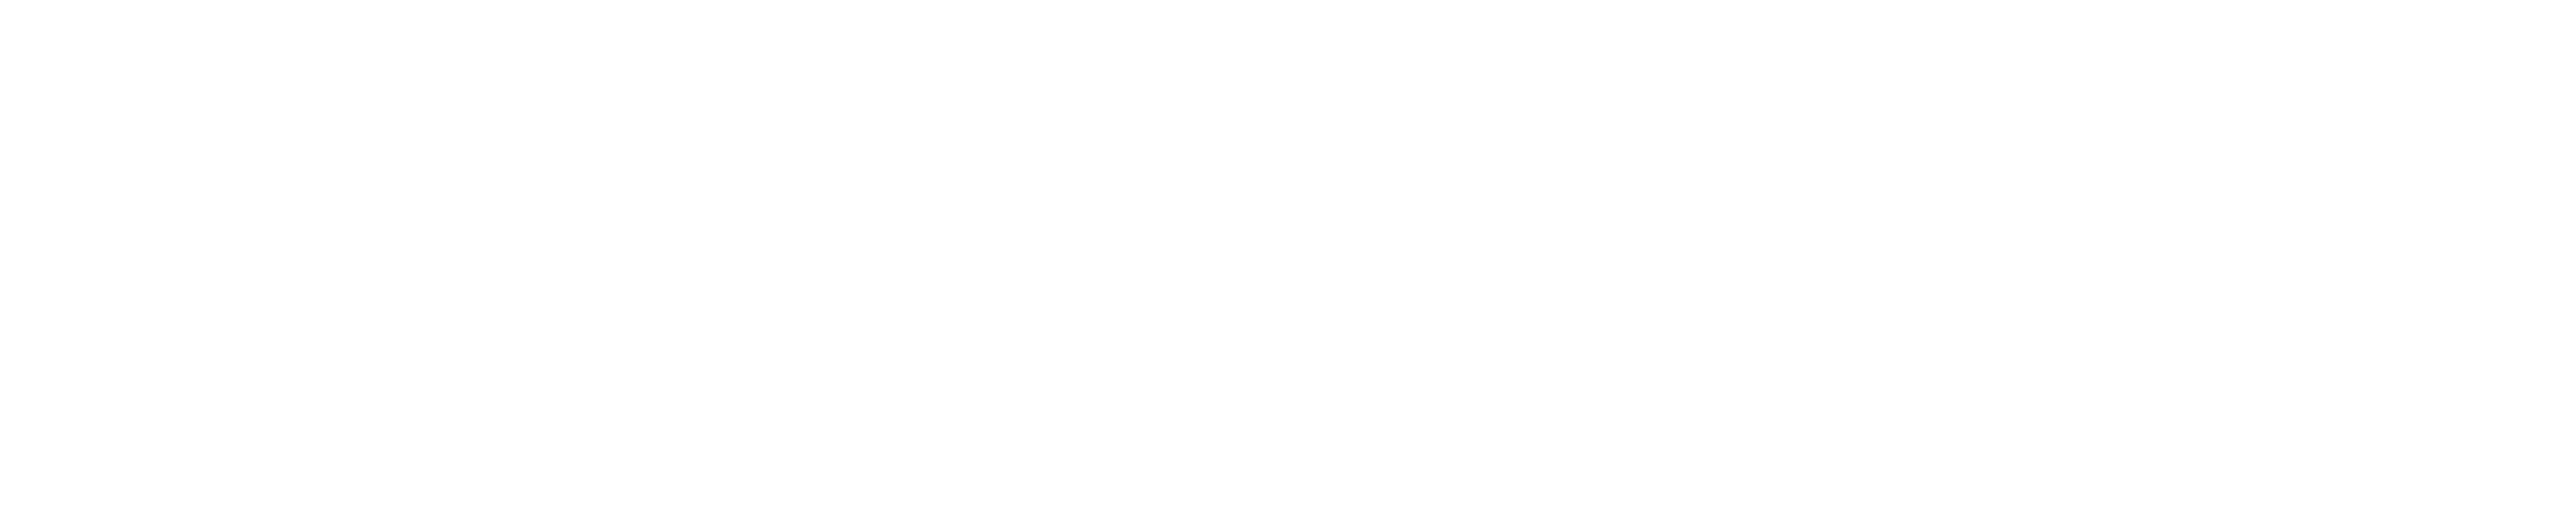 Strongvox Homes logo